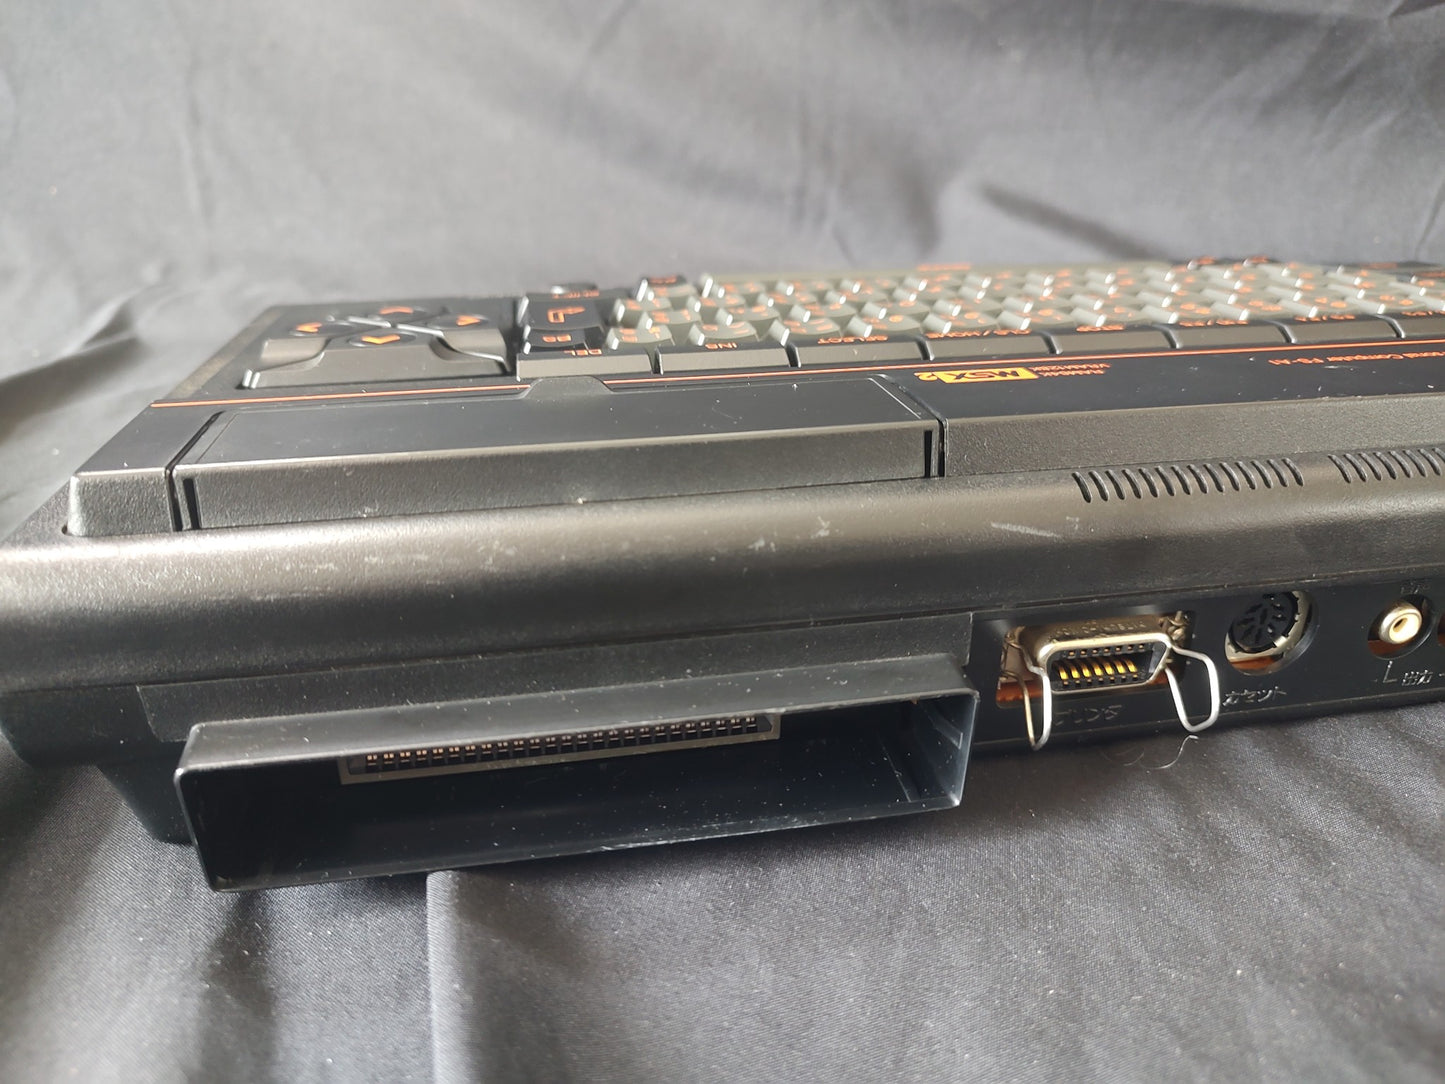 Panasonic MSX2 FS-A1 MK2 Personal Computer, PSU, AV cable, Game Working-g0216-